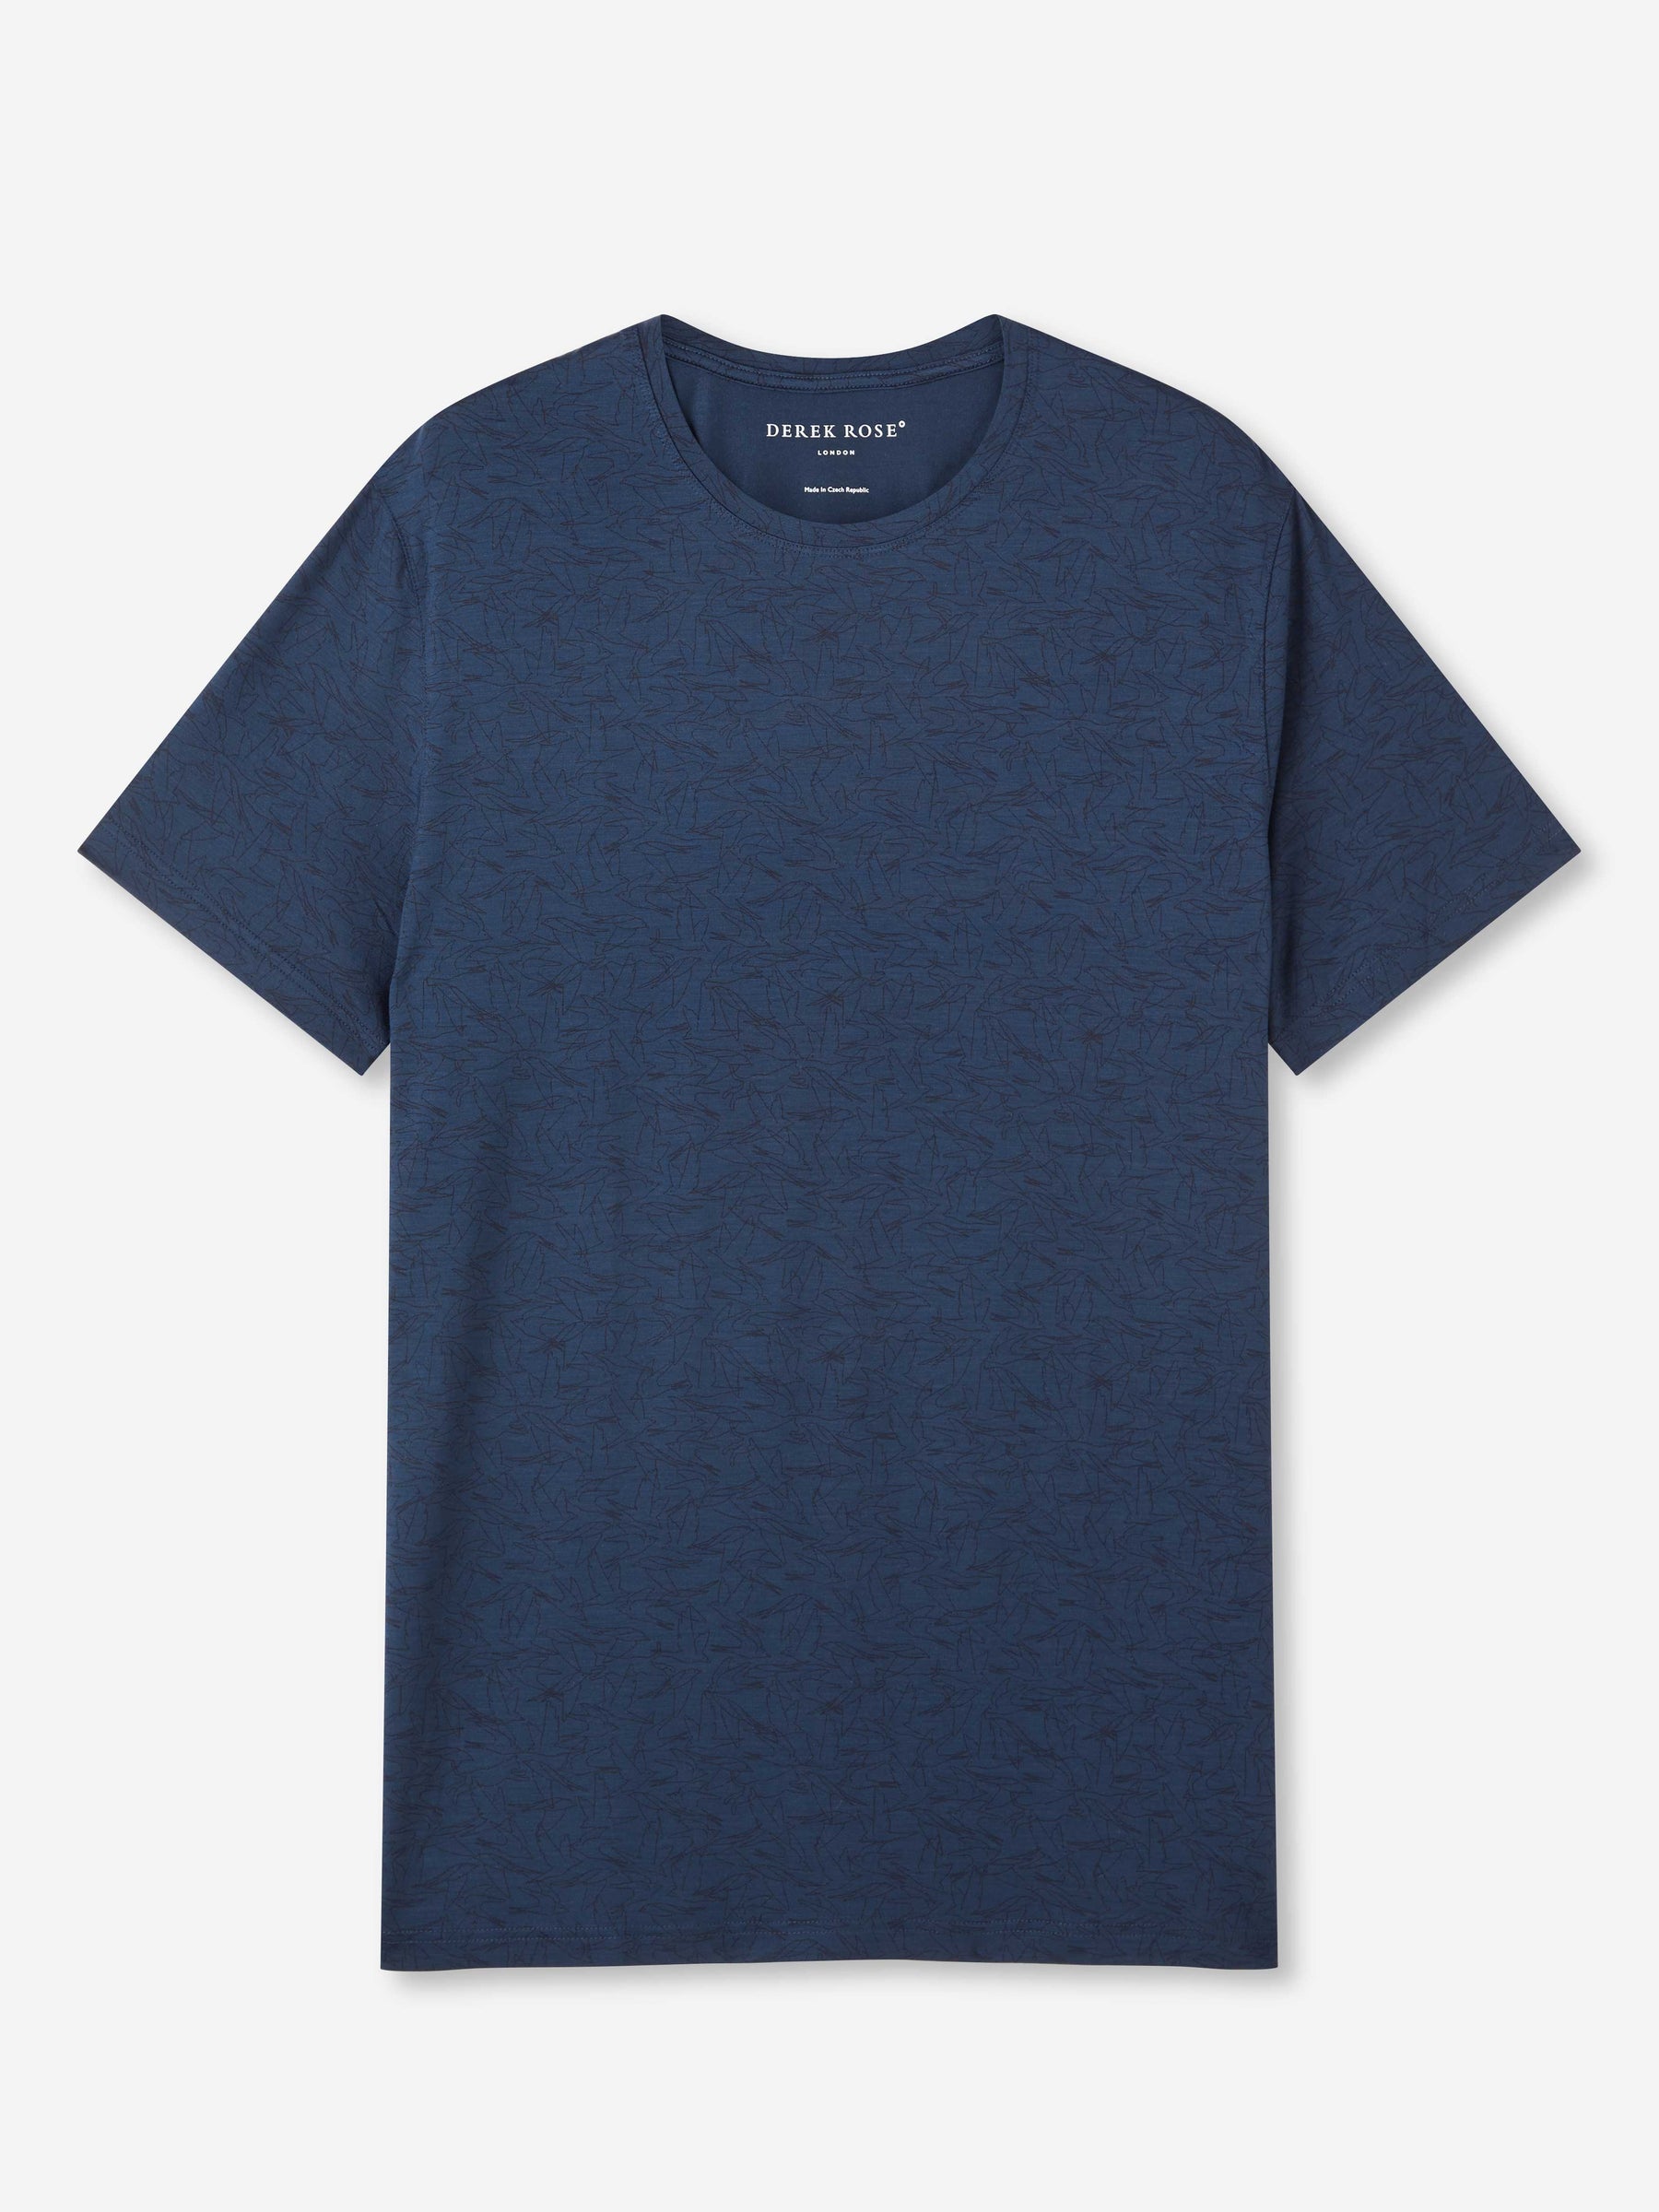 Men's T-Shirt London 9 Bird Print Micro Modal Navy